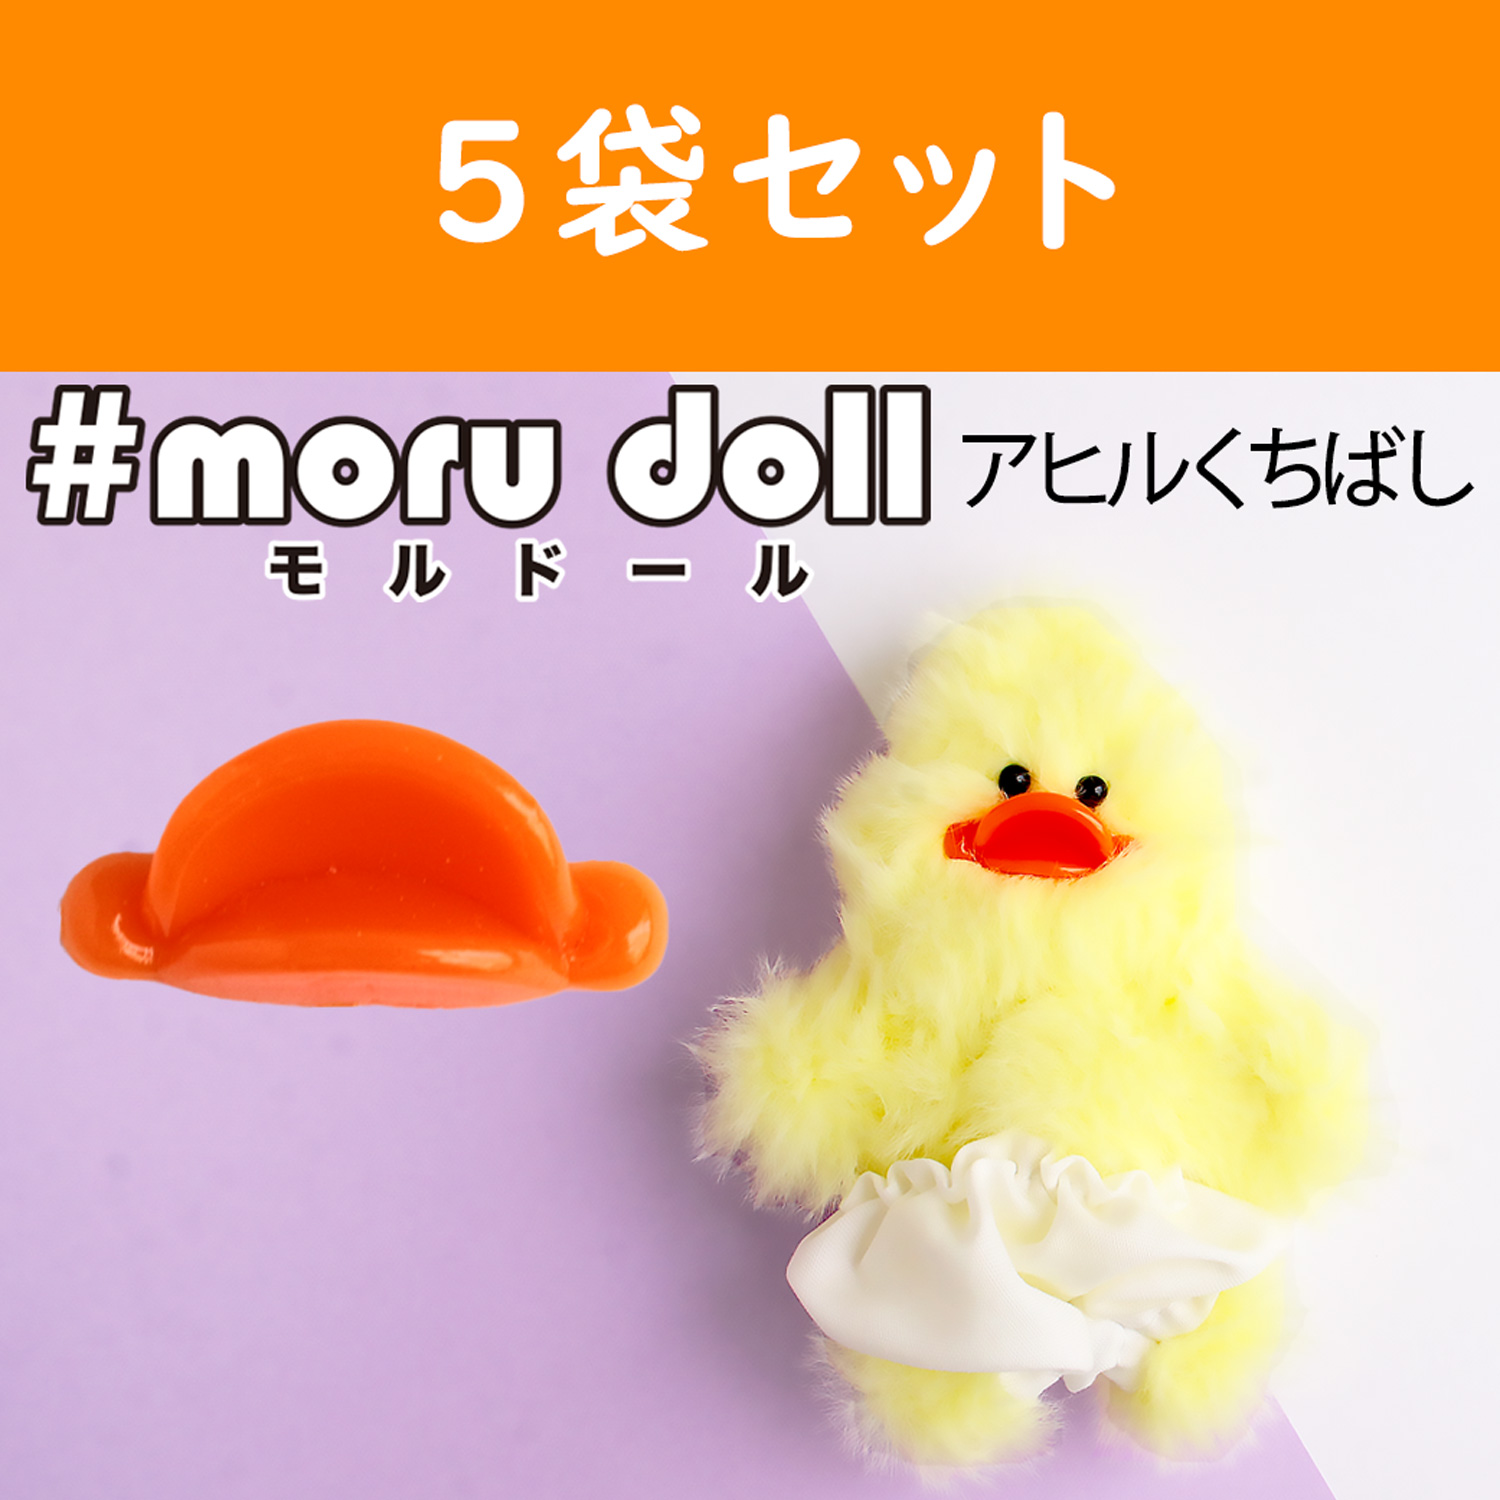 MOL-DUCK-5 モール人形 モールドール  アヒルくちばし1個入×5袋セット (セット)